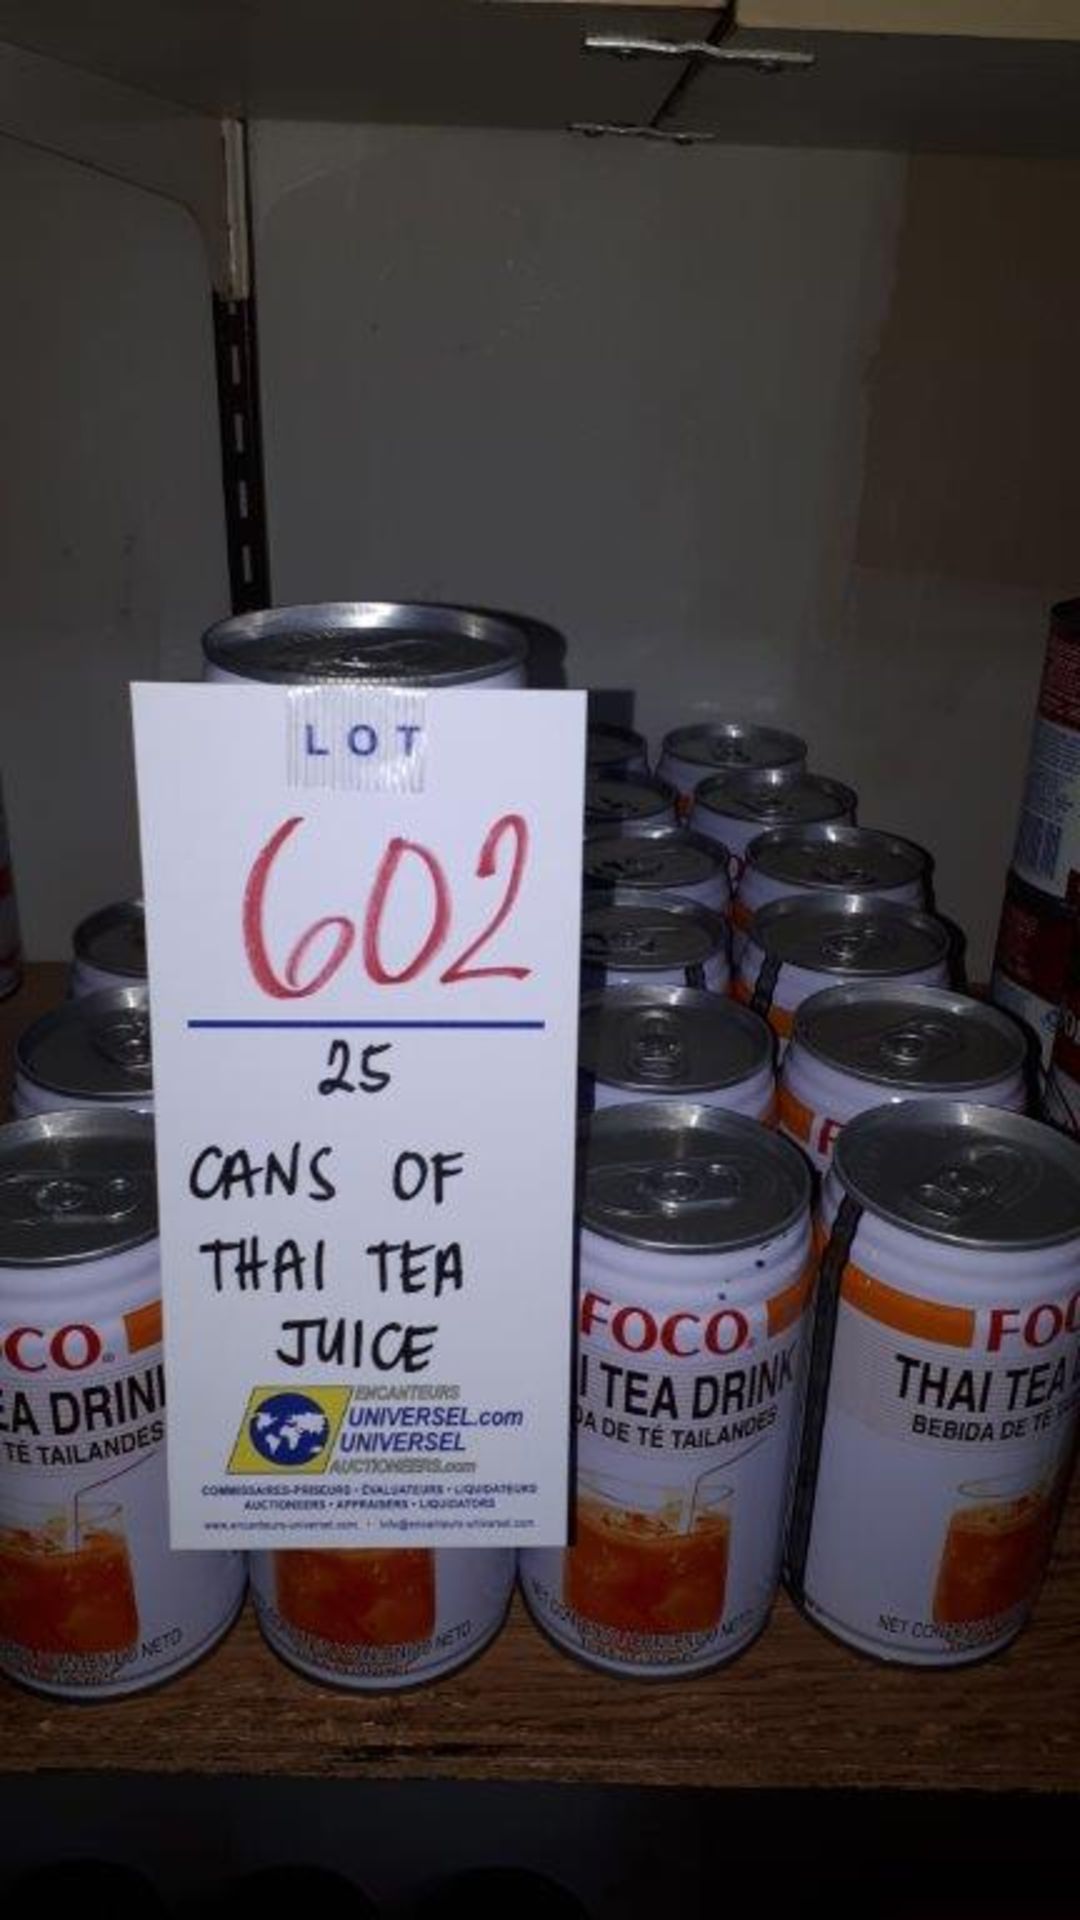 Foco Thai tea drink